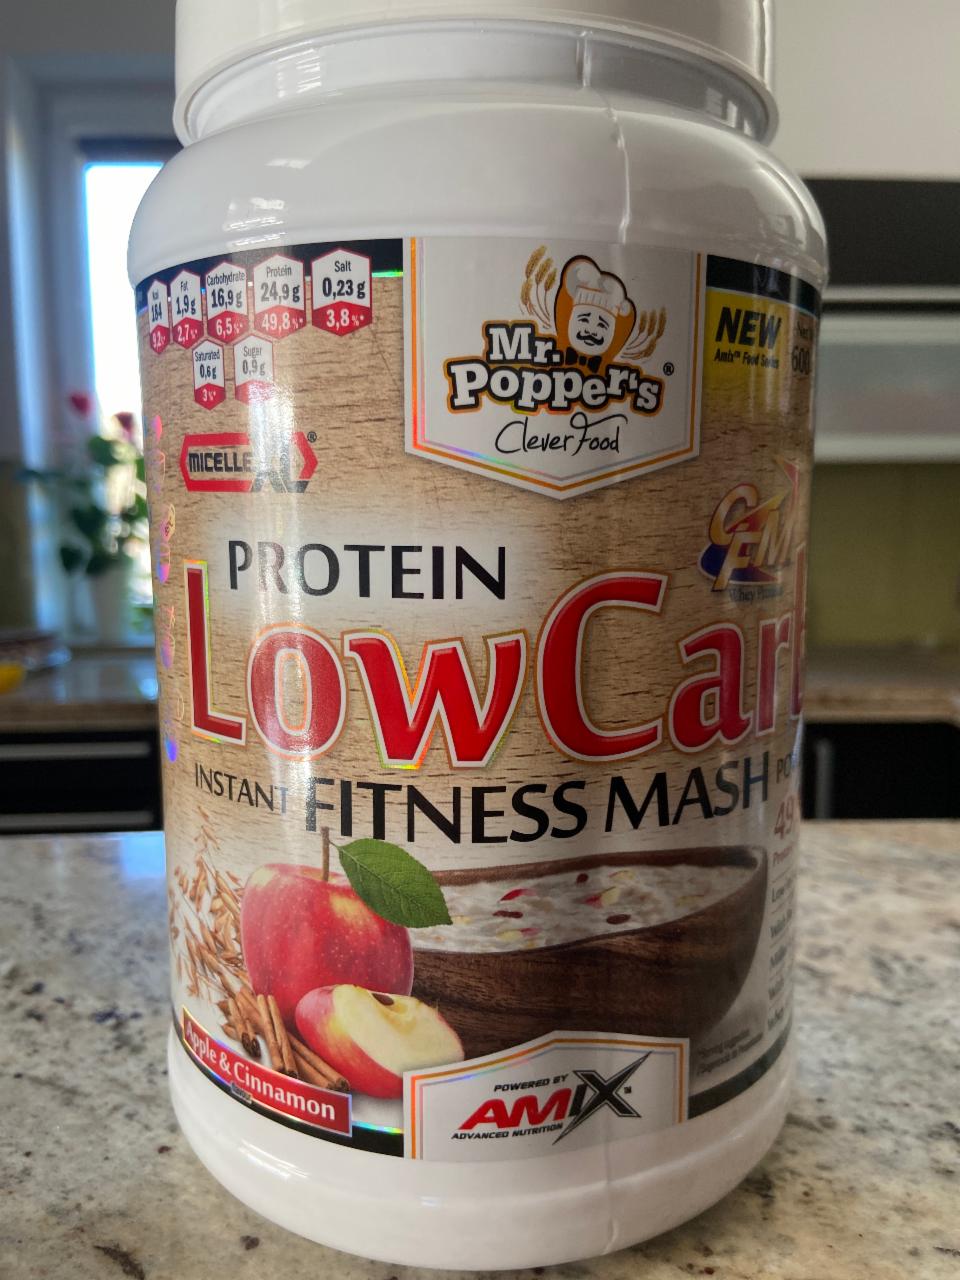 Fotografie - Protein Low carb instant fitness mash Apple & Cinnamon Amix Mr. Popper's